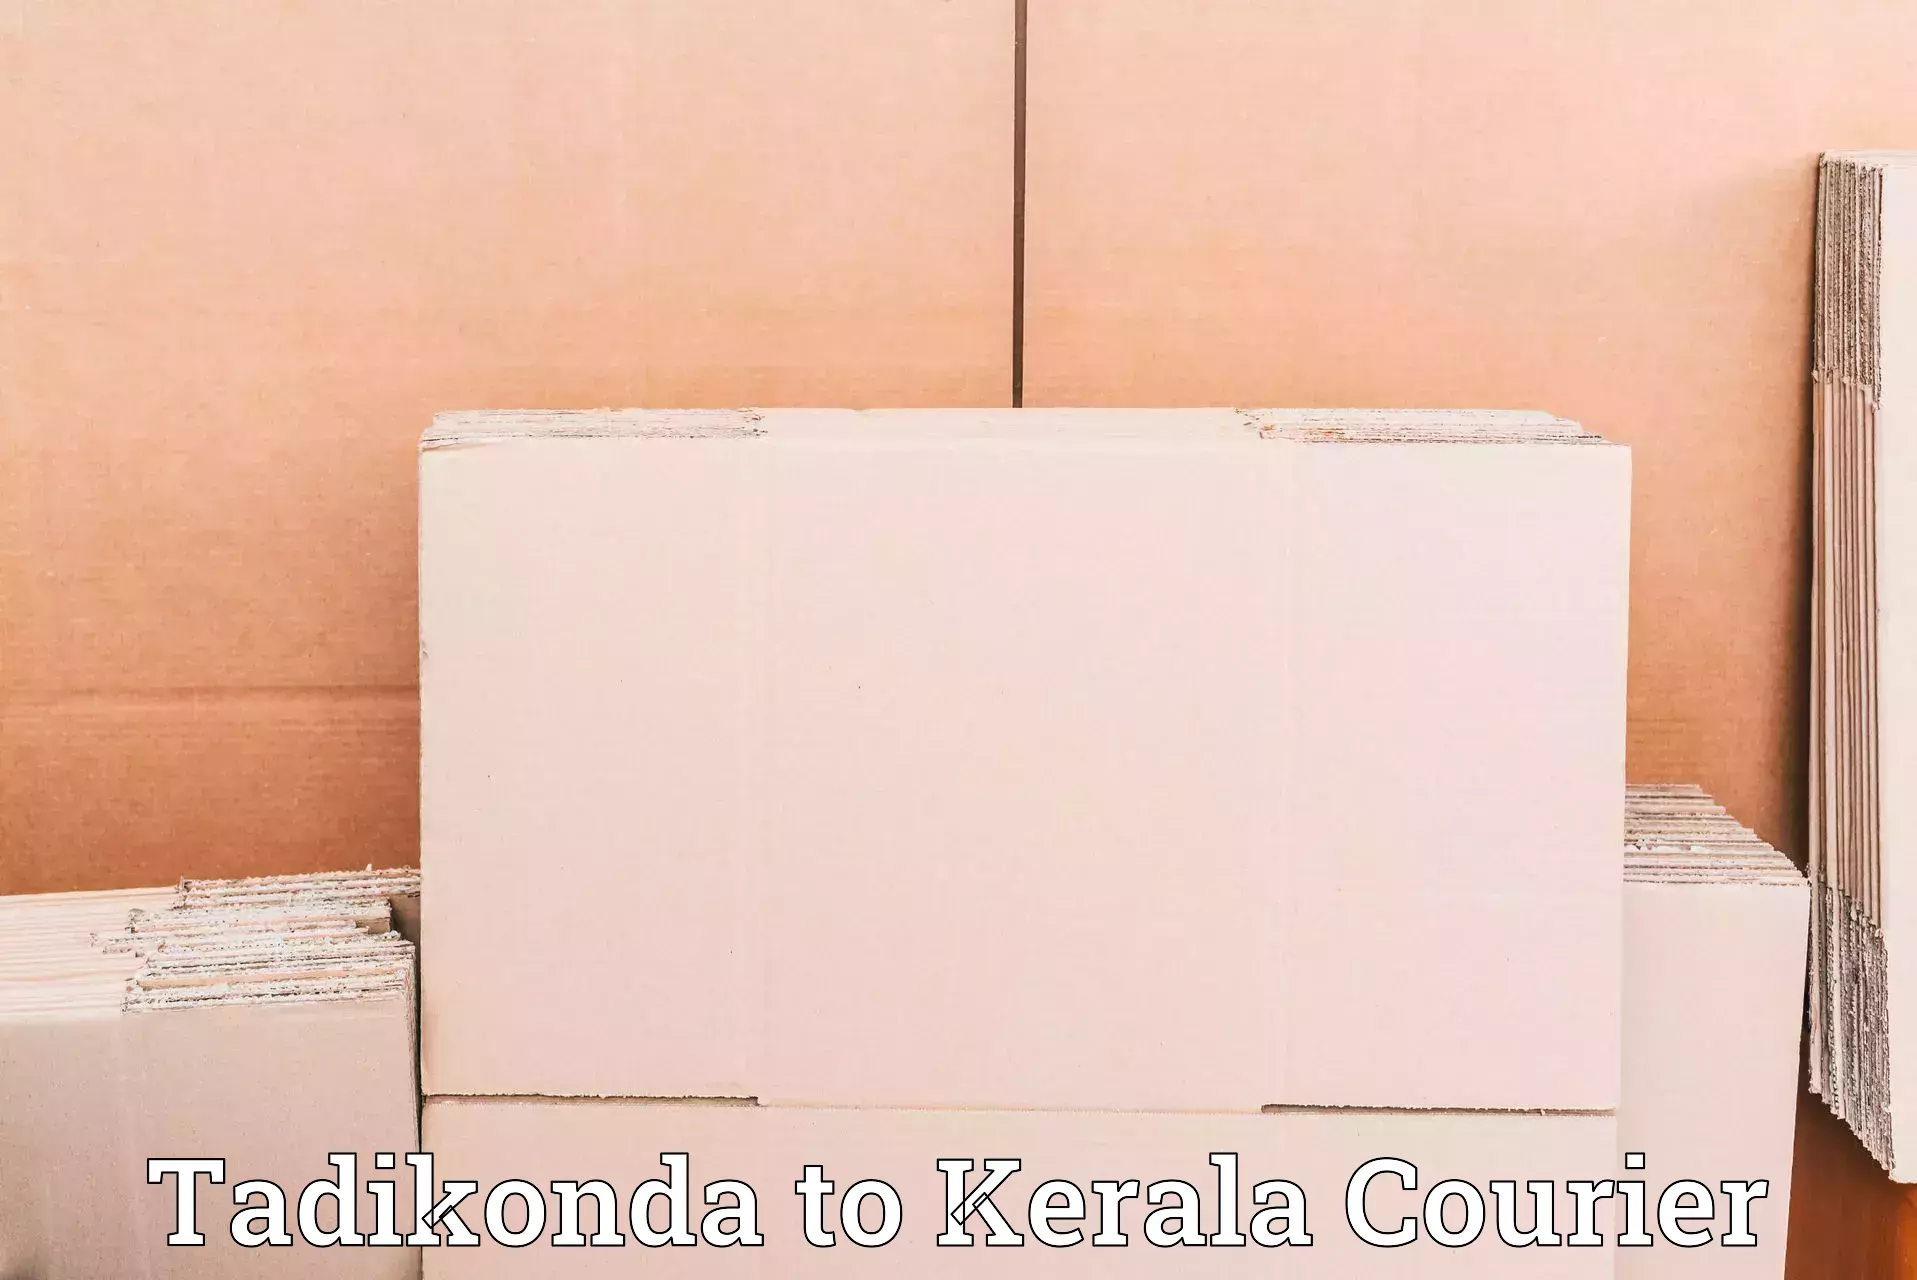 Efficient cargo handling Tadikonda to Kerala